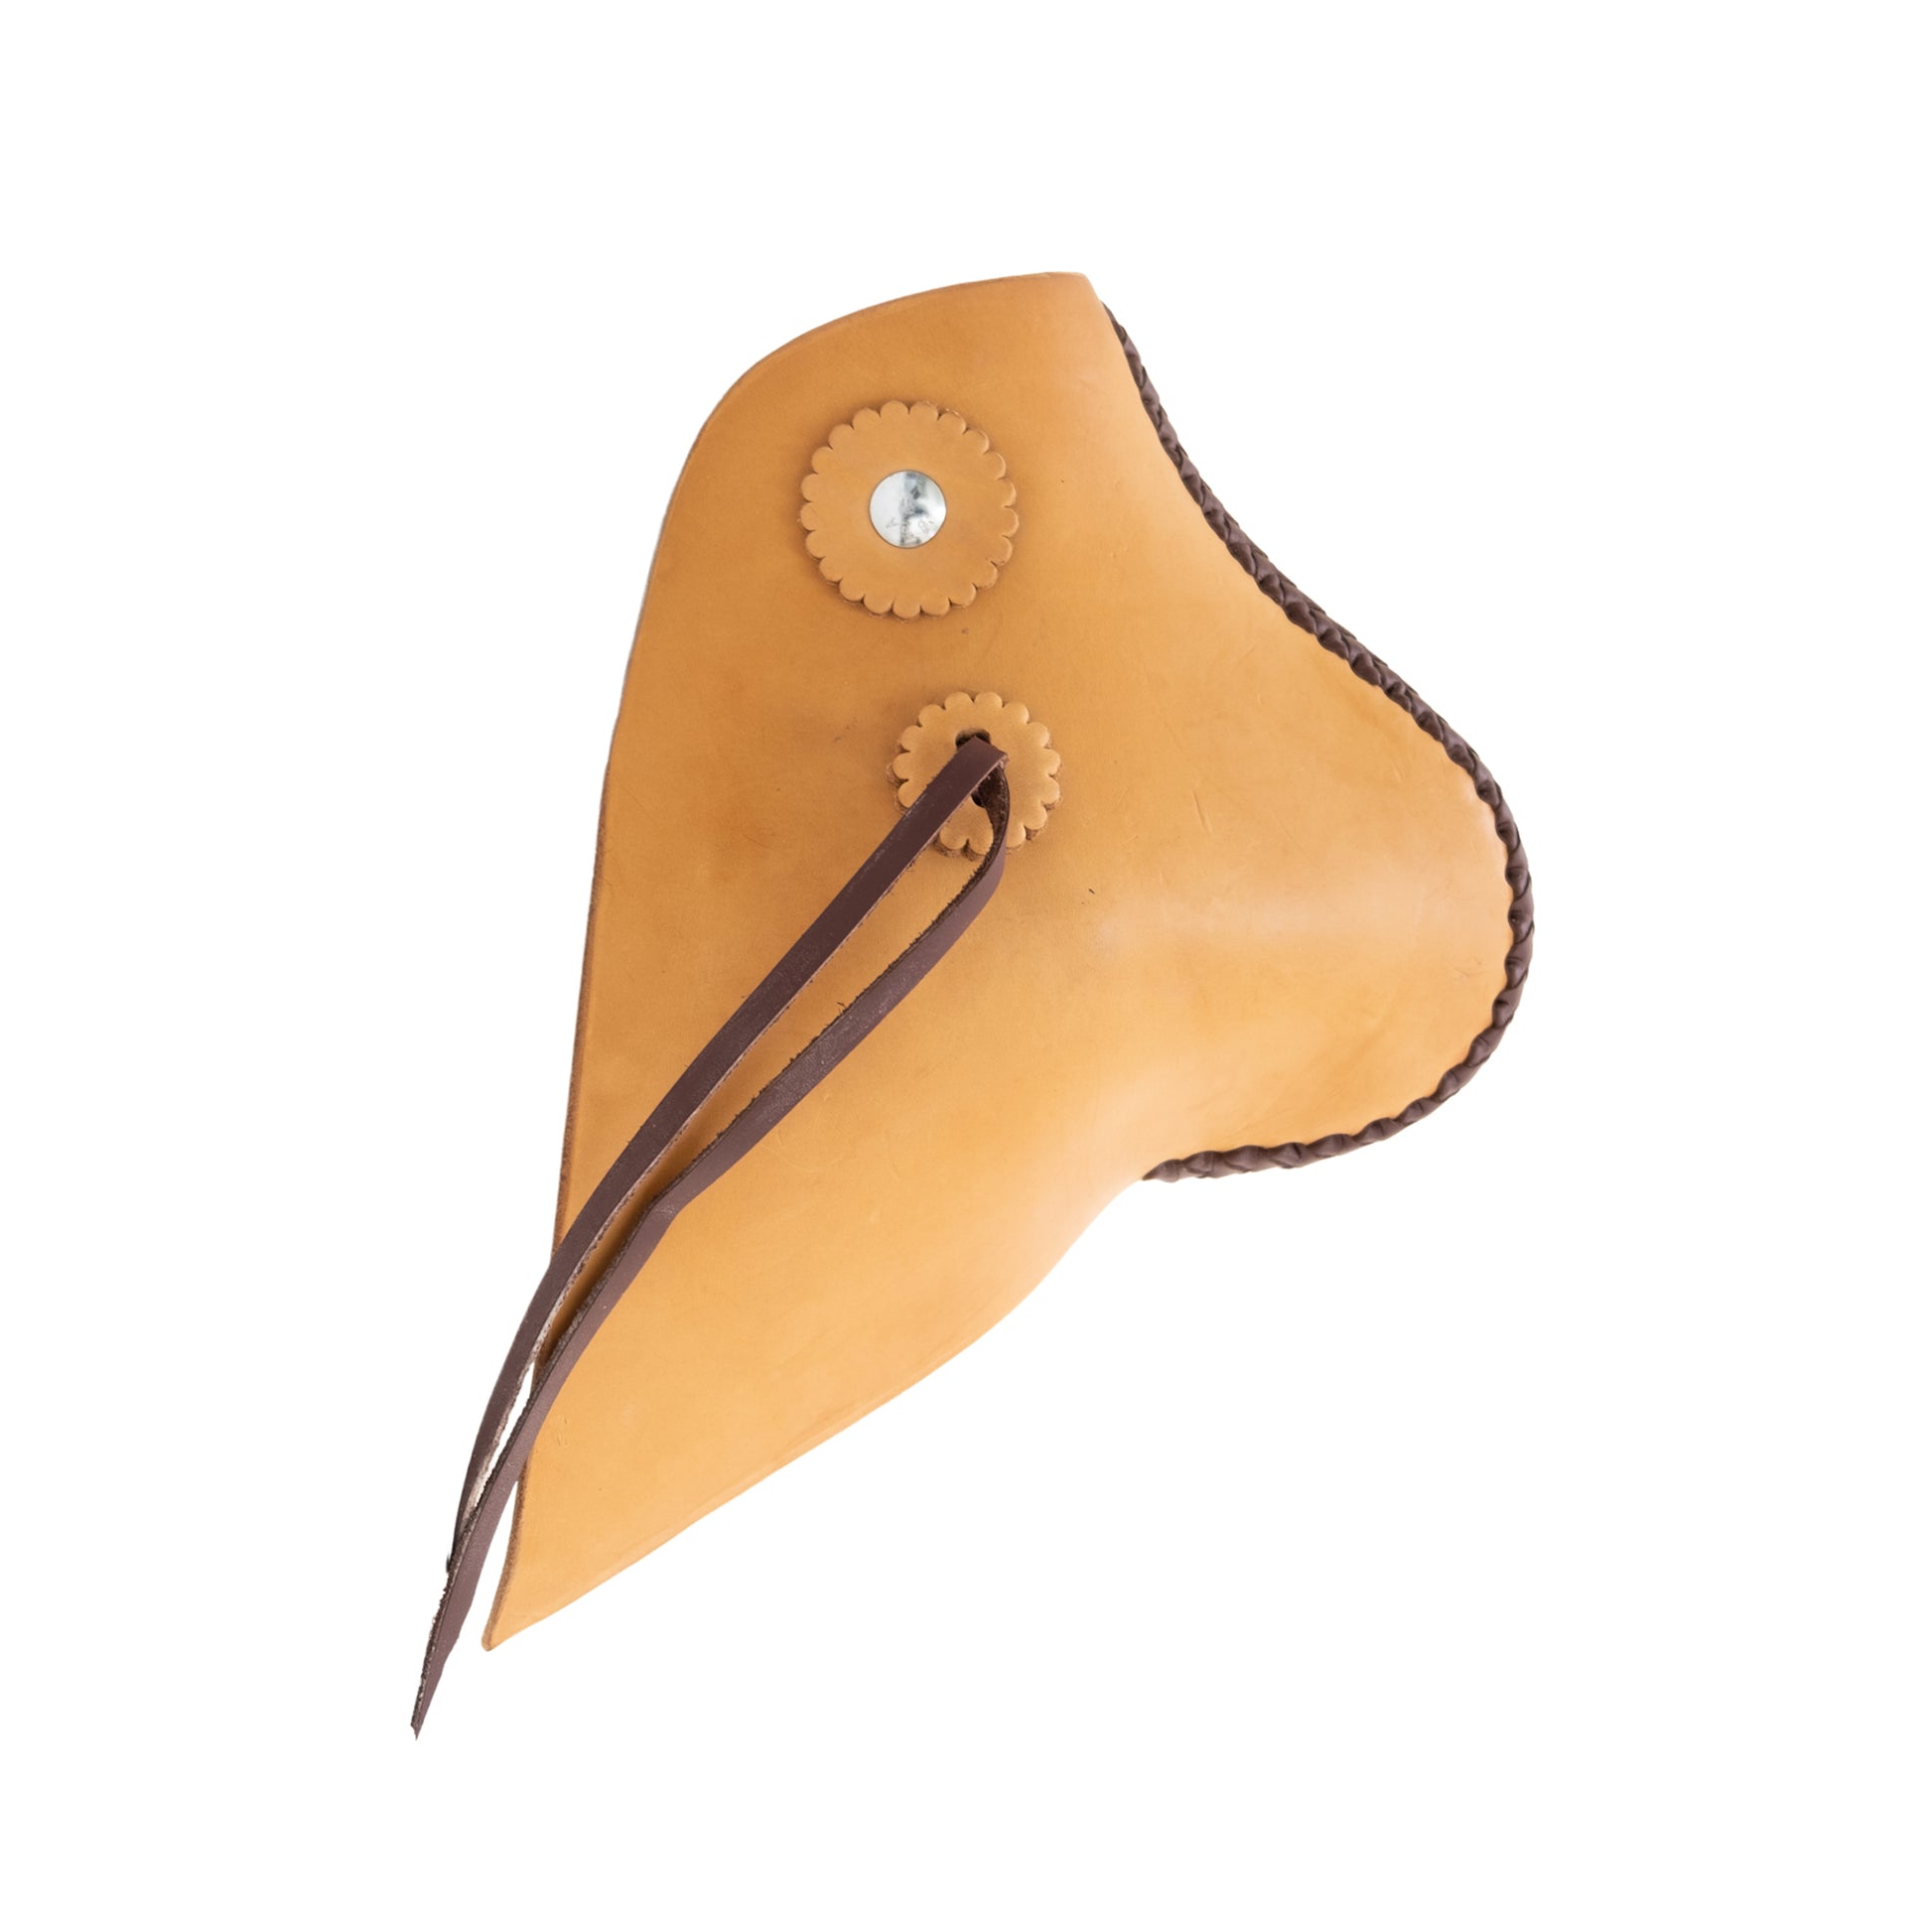 2" Tapedero bell stirrups plain golden leather (pair).